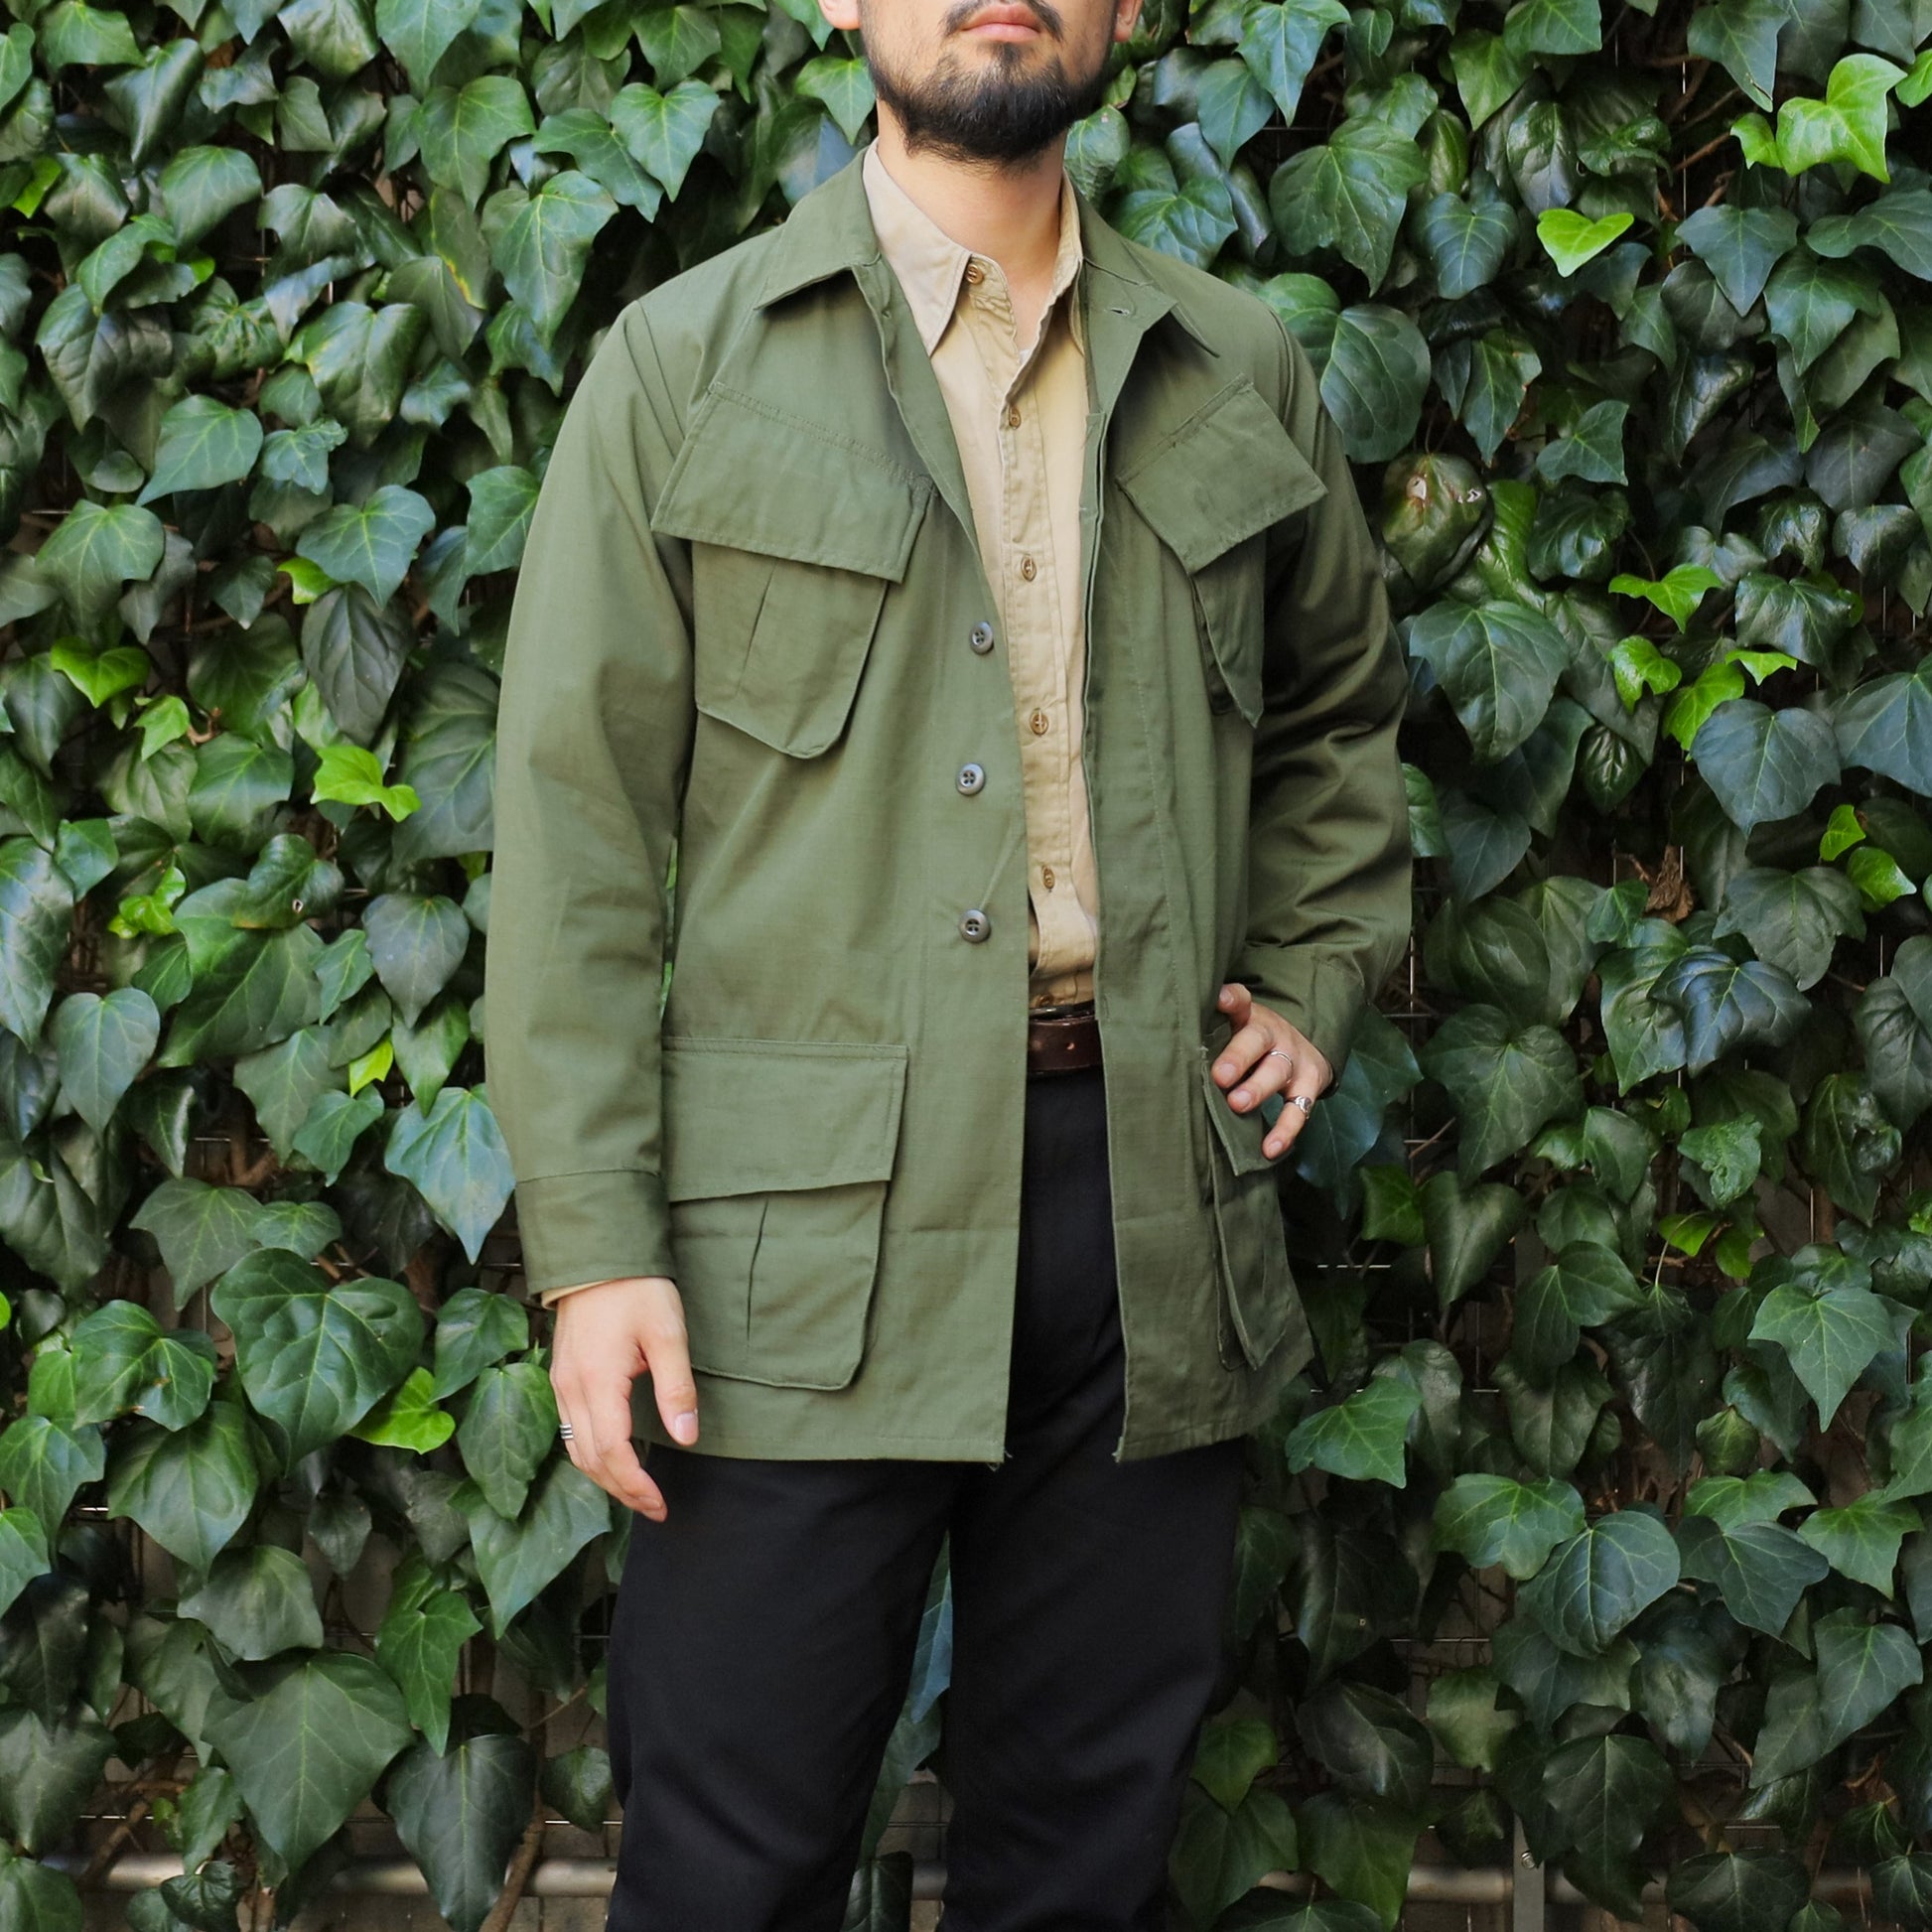 【2nd medium/short】 Jungle fatigue jacket